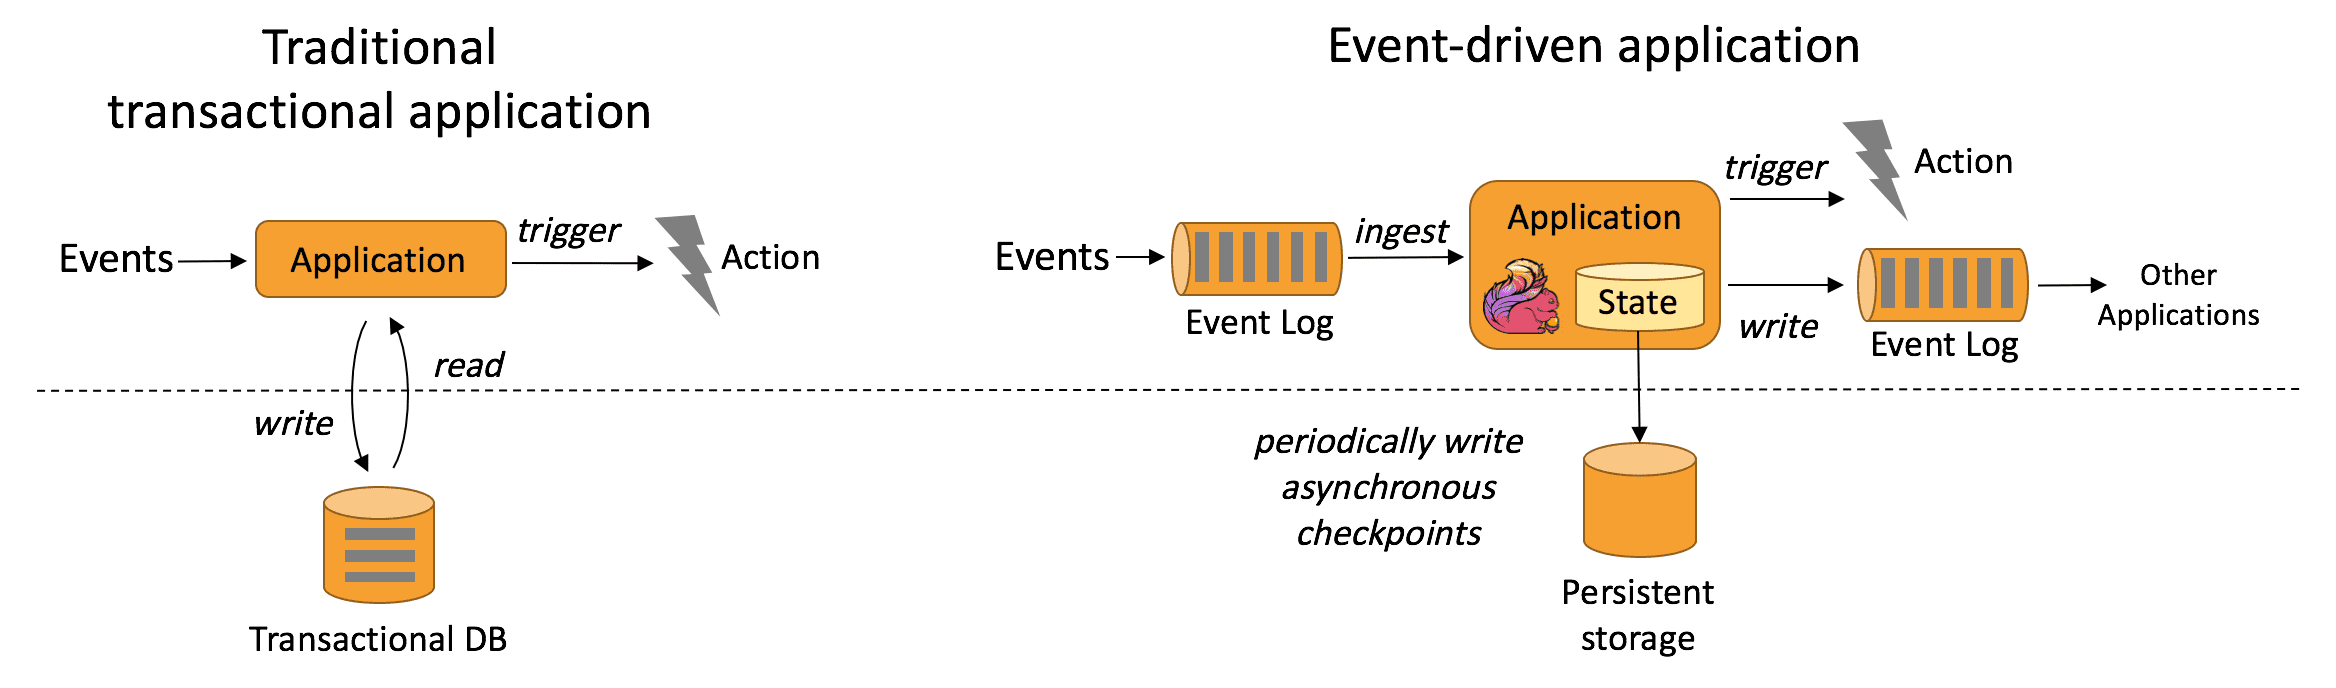 event driven application